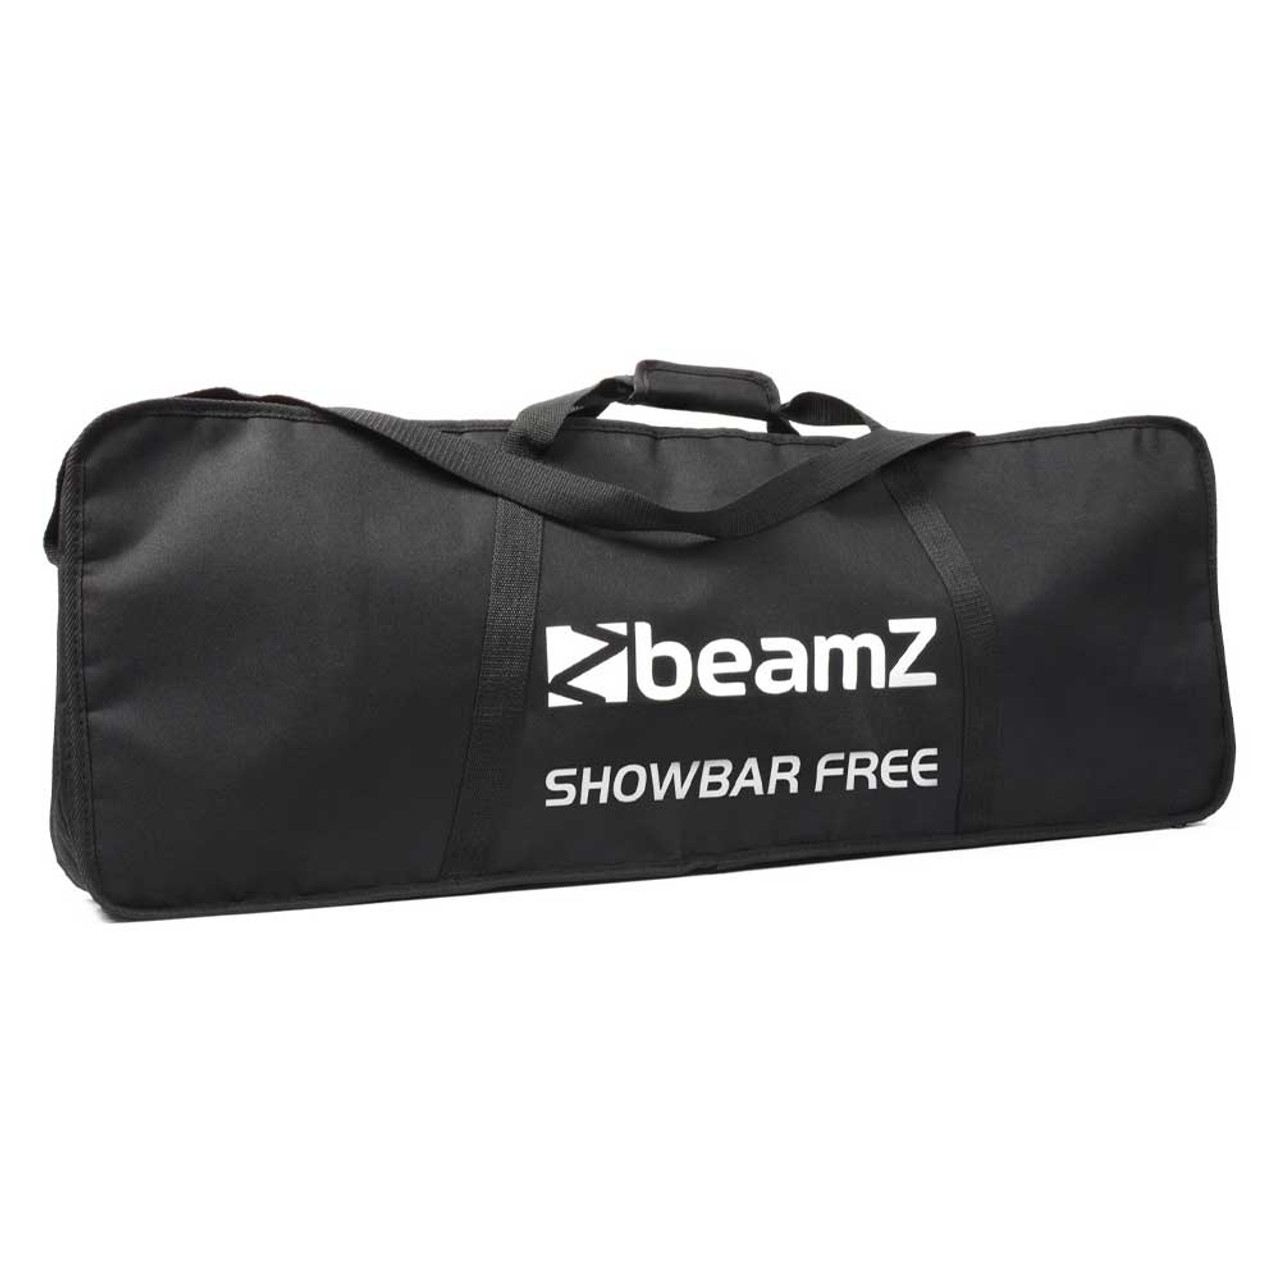 Beamz SHOWBAR FREE 2x Par 2x Derby and Strobe